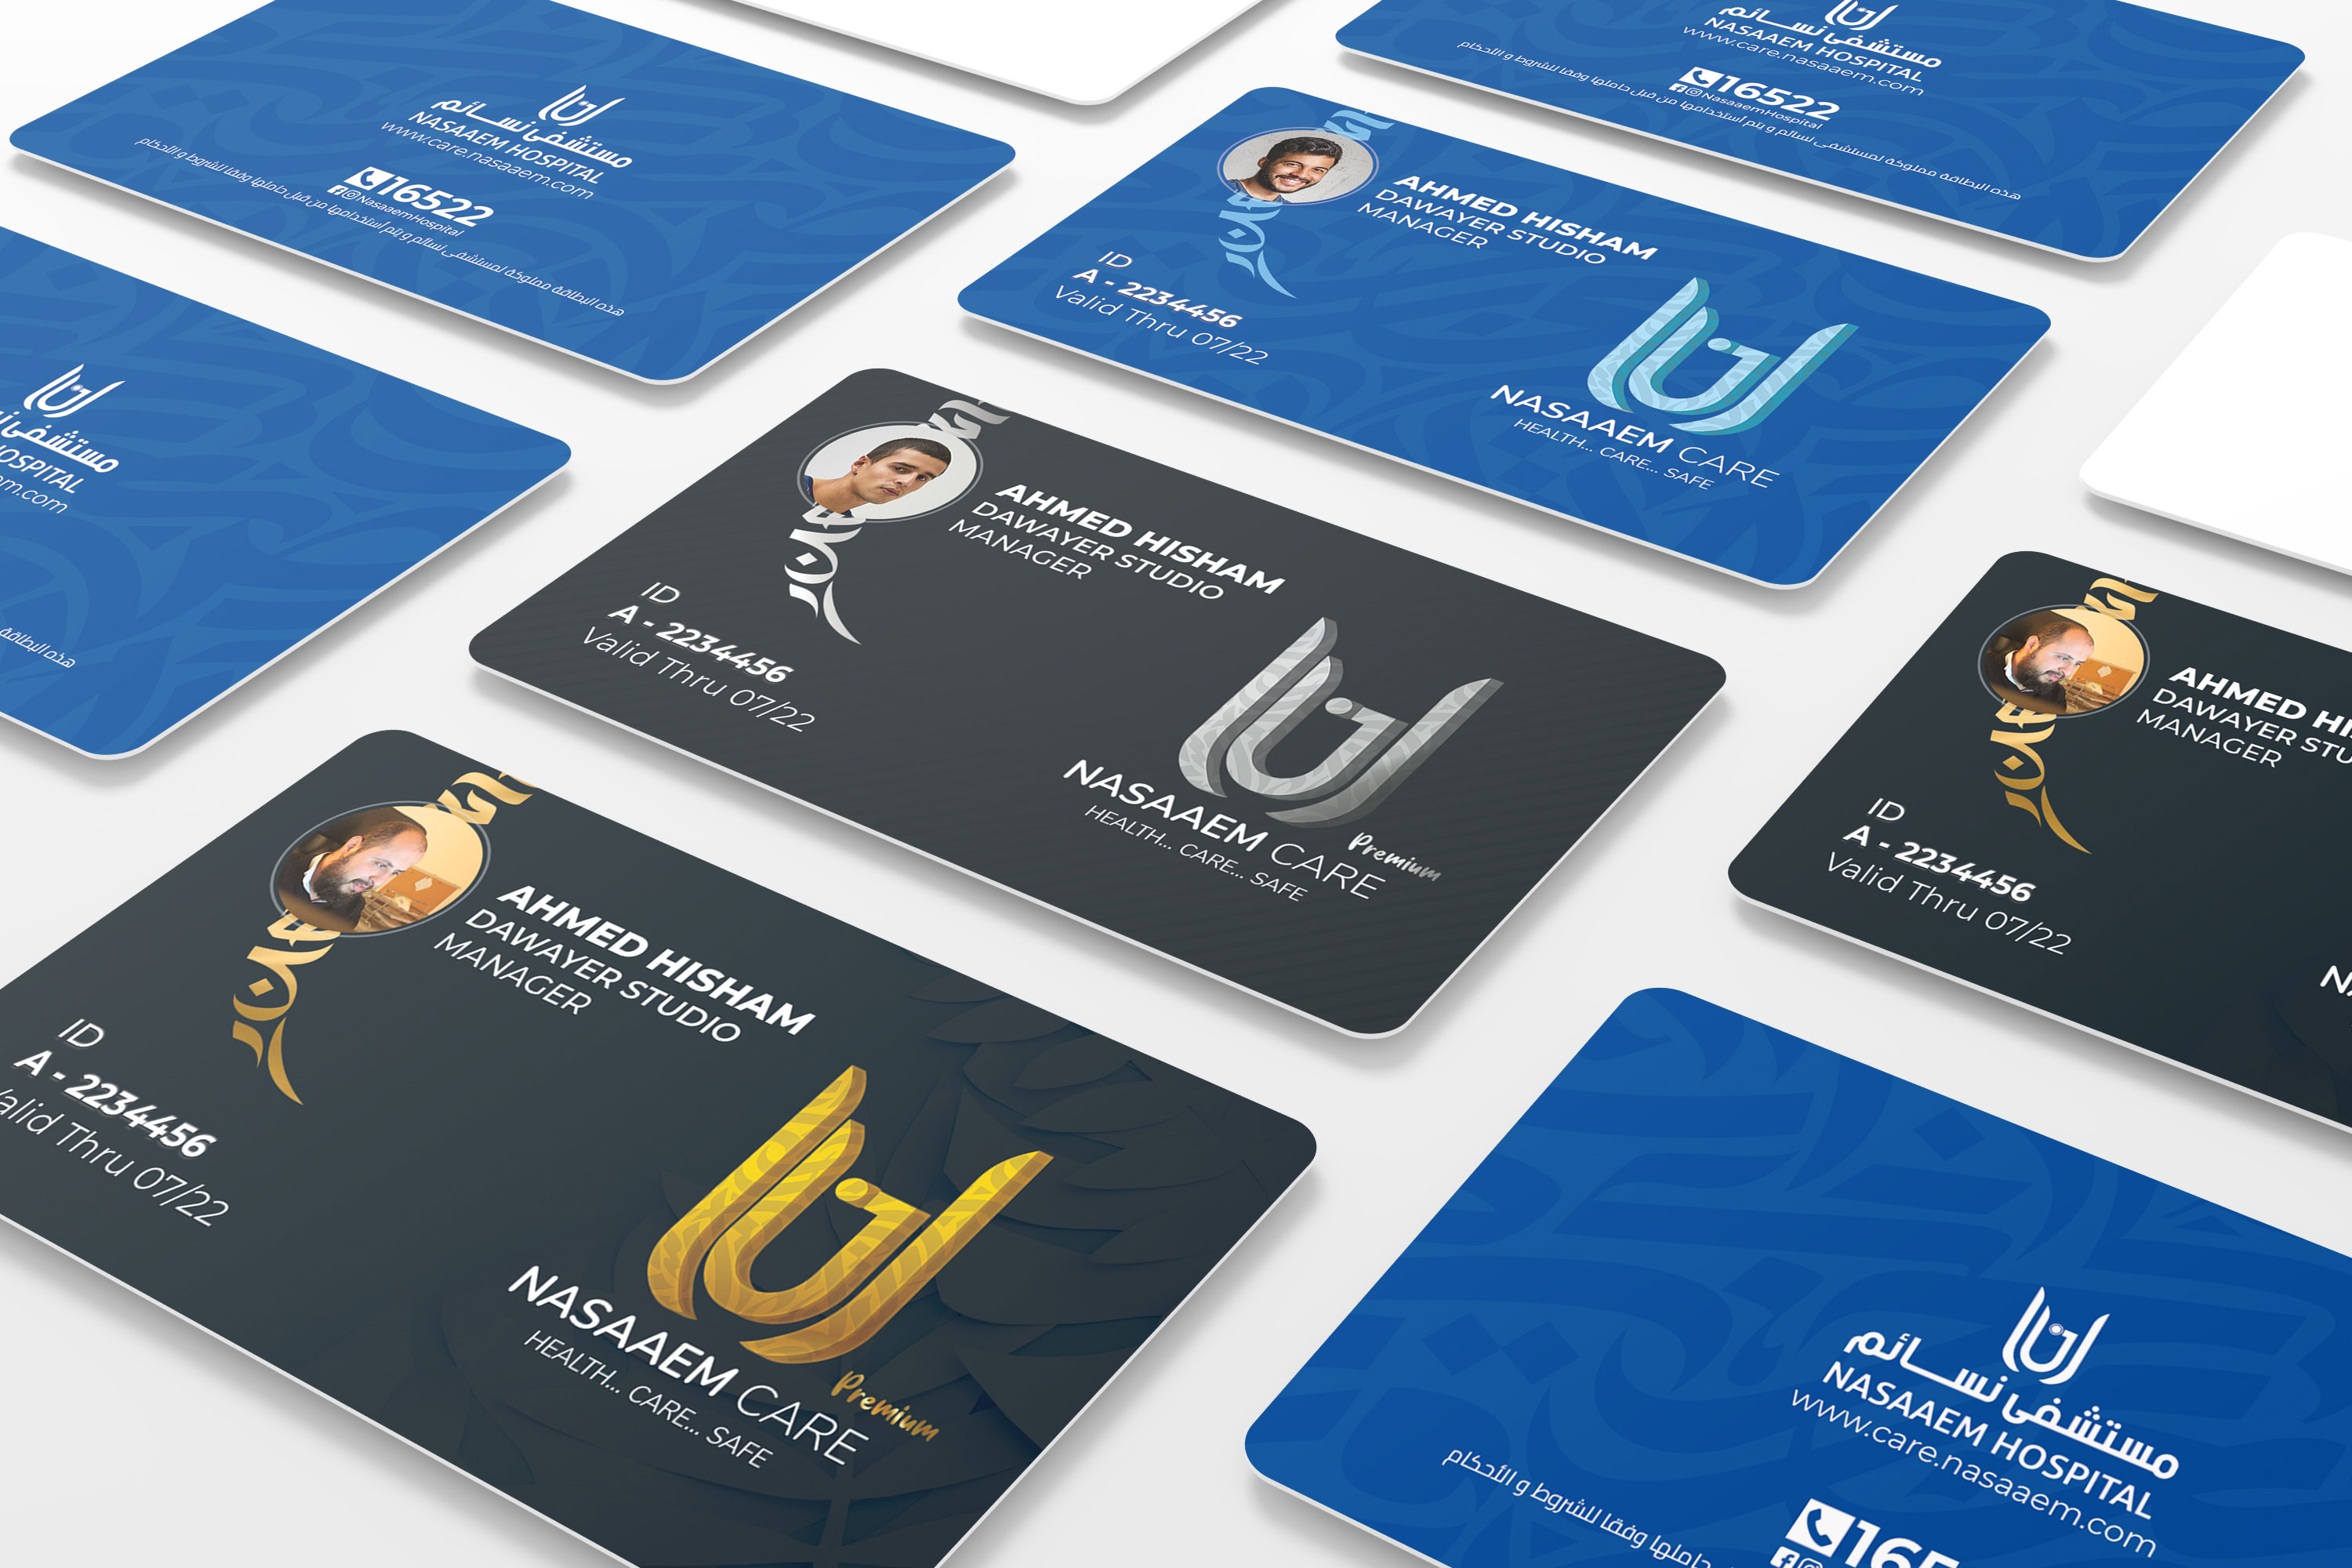 nasaaem hospital care program insurance card design branding elements